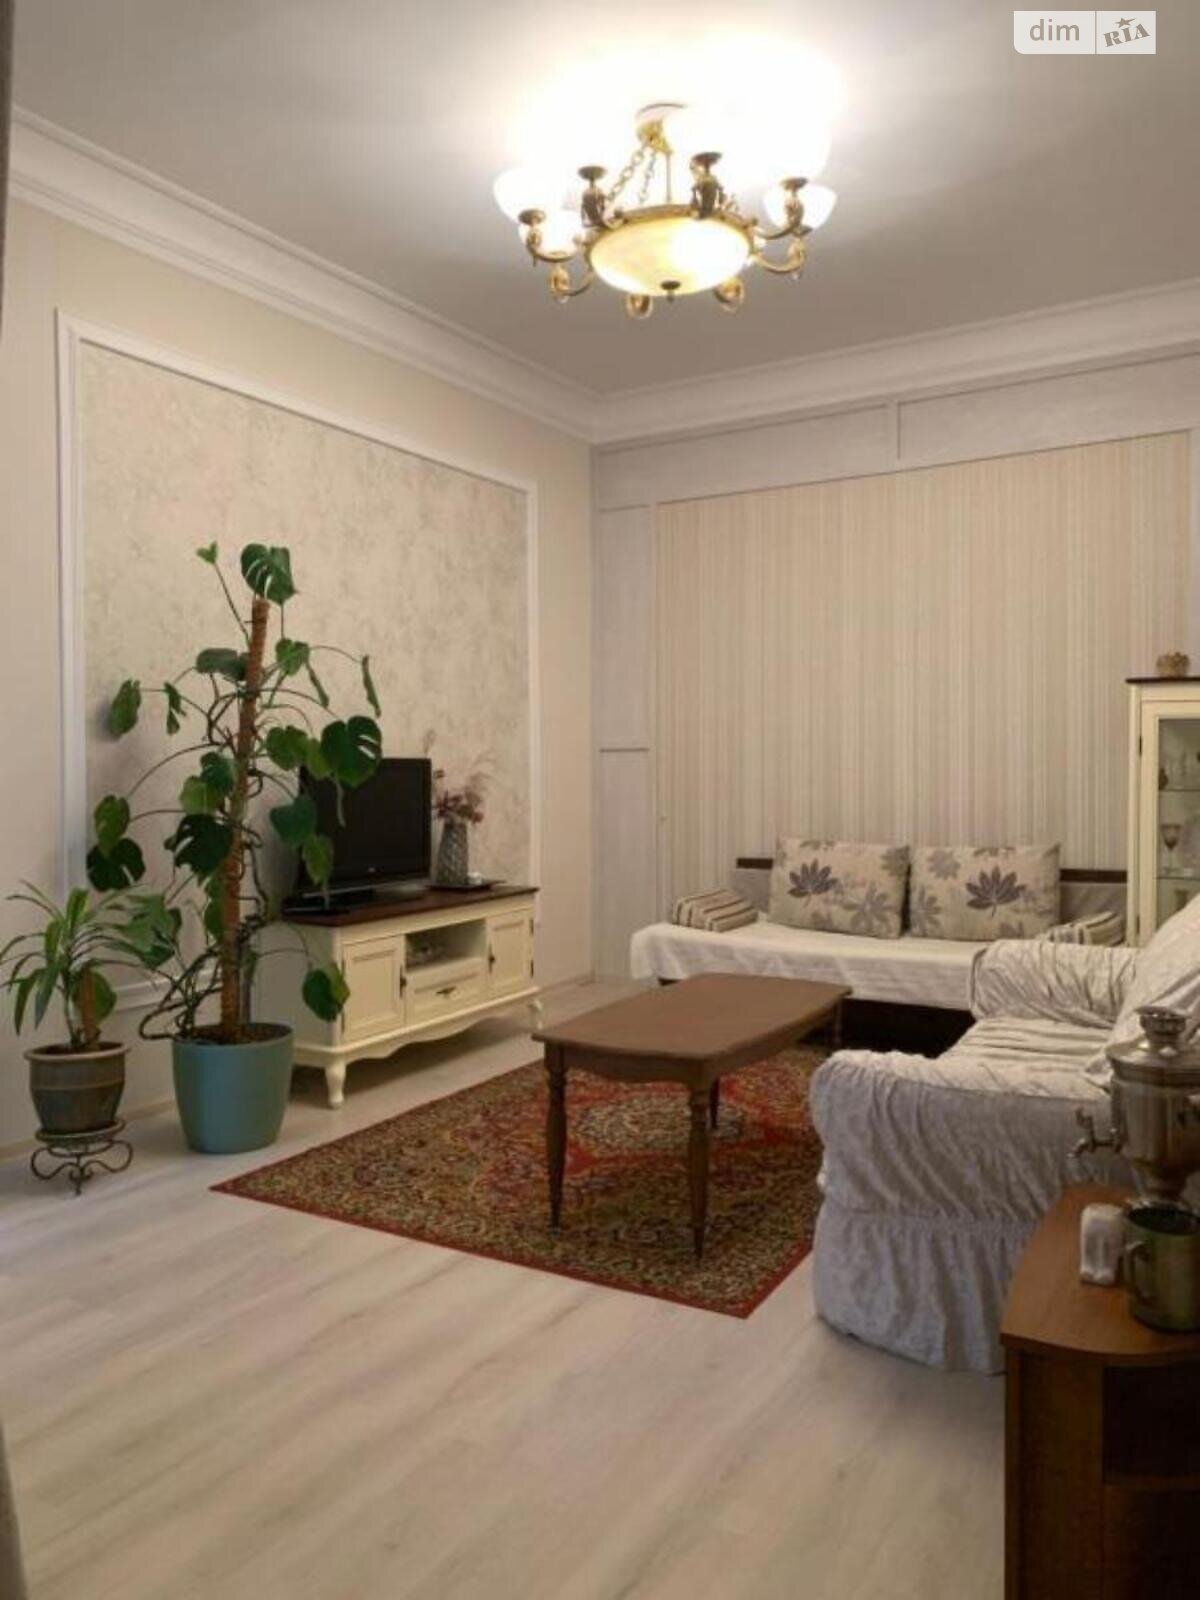 Продажа трехкомнатной квартиры в Киеве, на ул. Шота Руставели 32, район Печерский фото 1